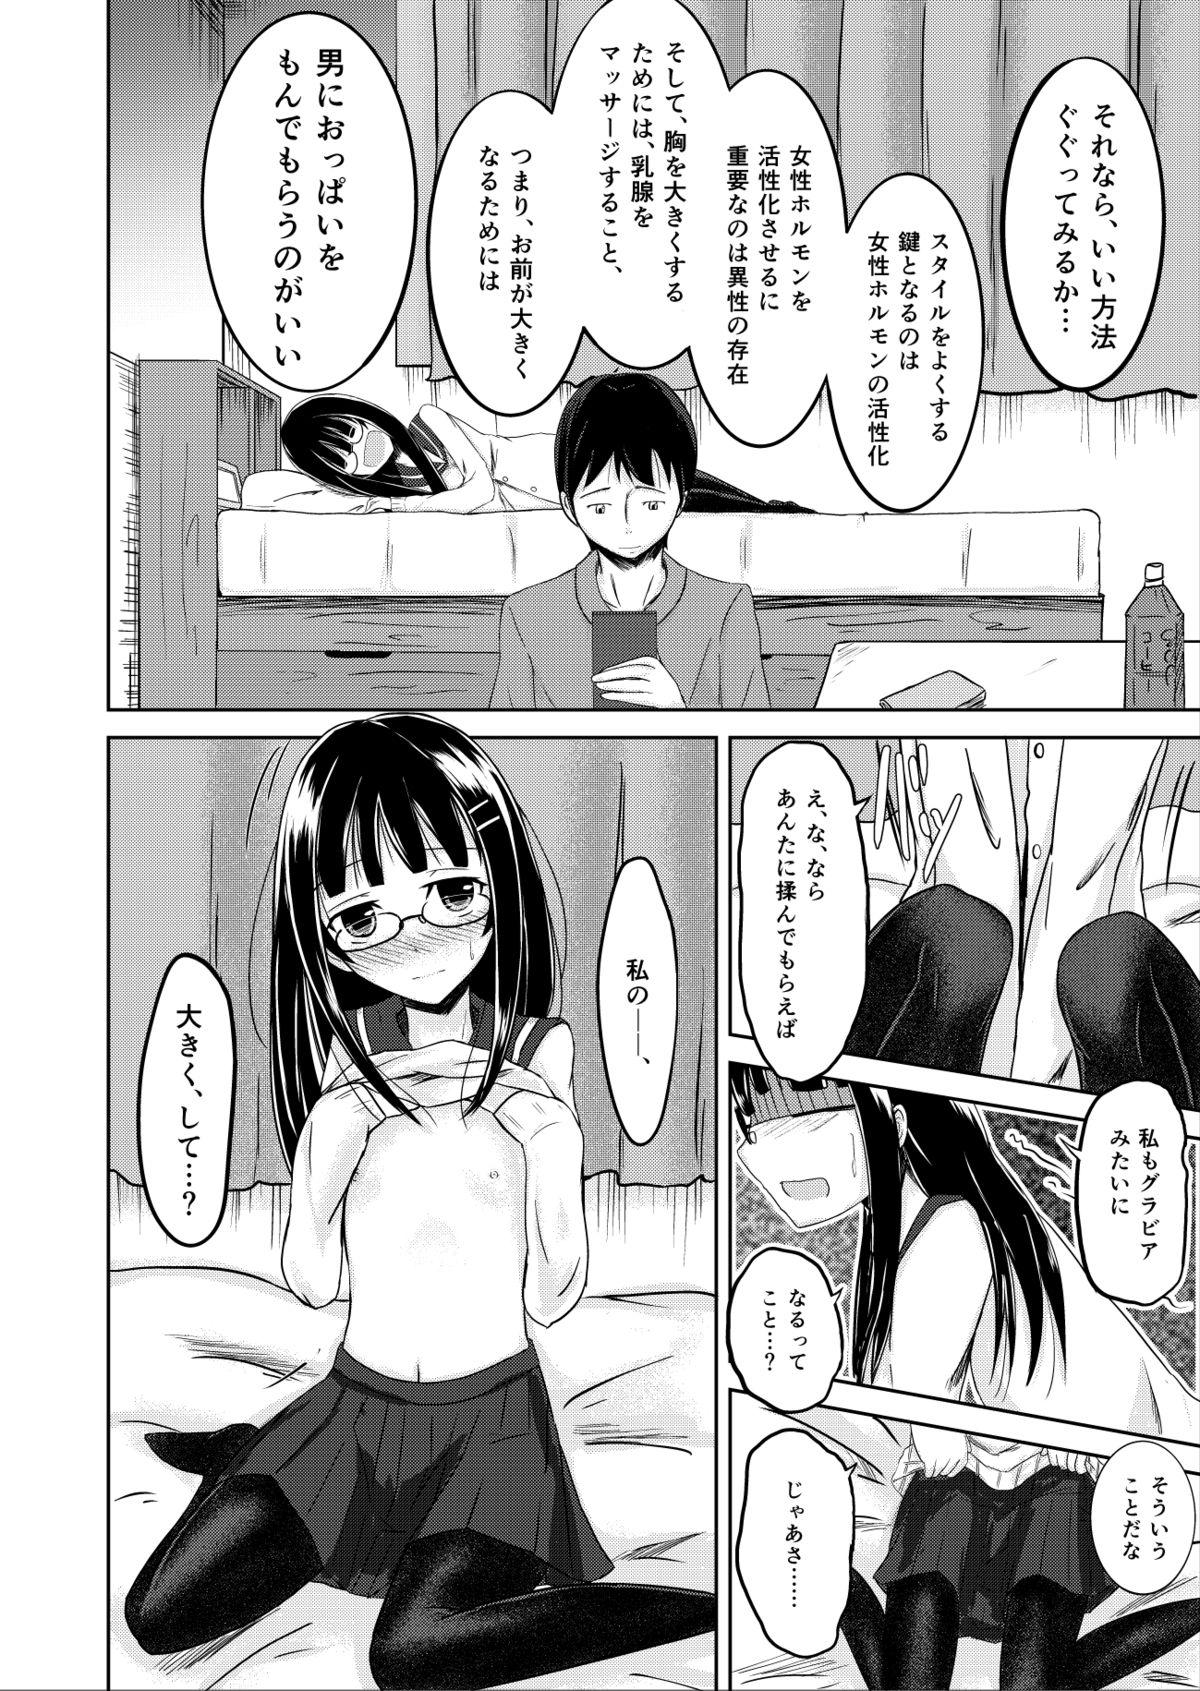 Cheating Oppai, Ikuseichuu Glasses - Page 2